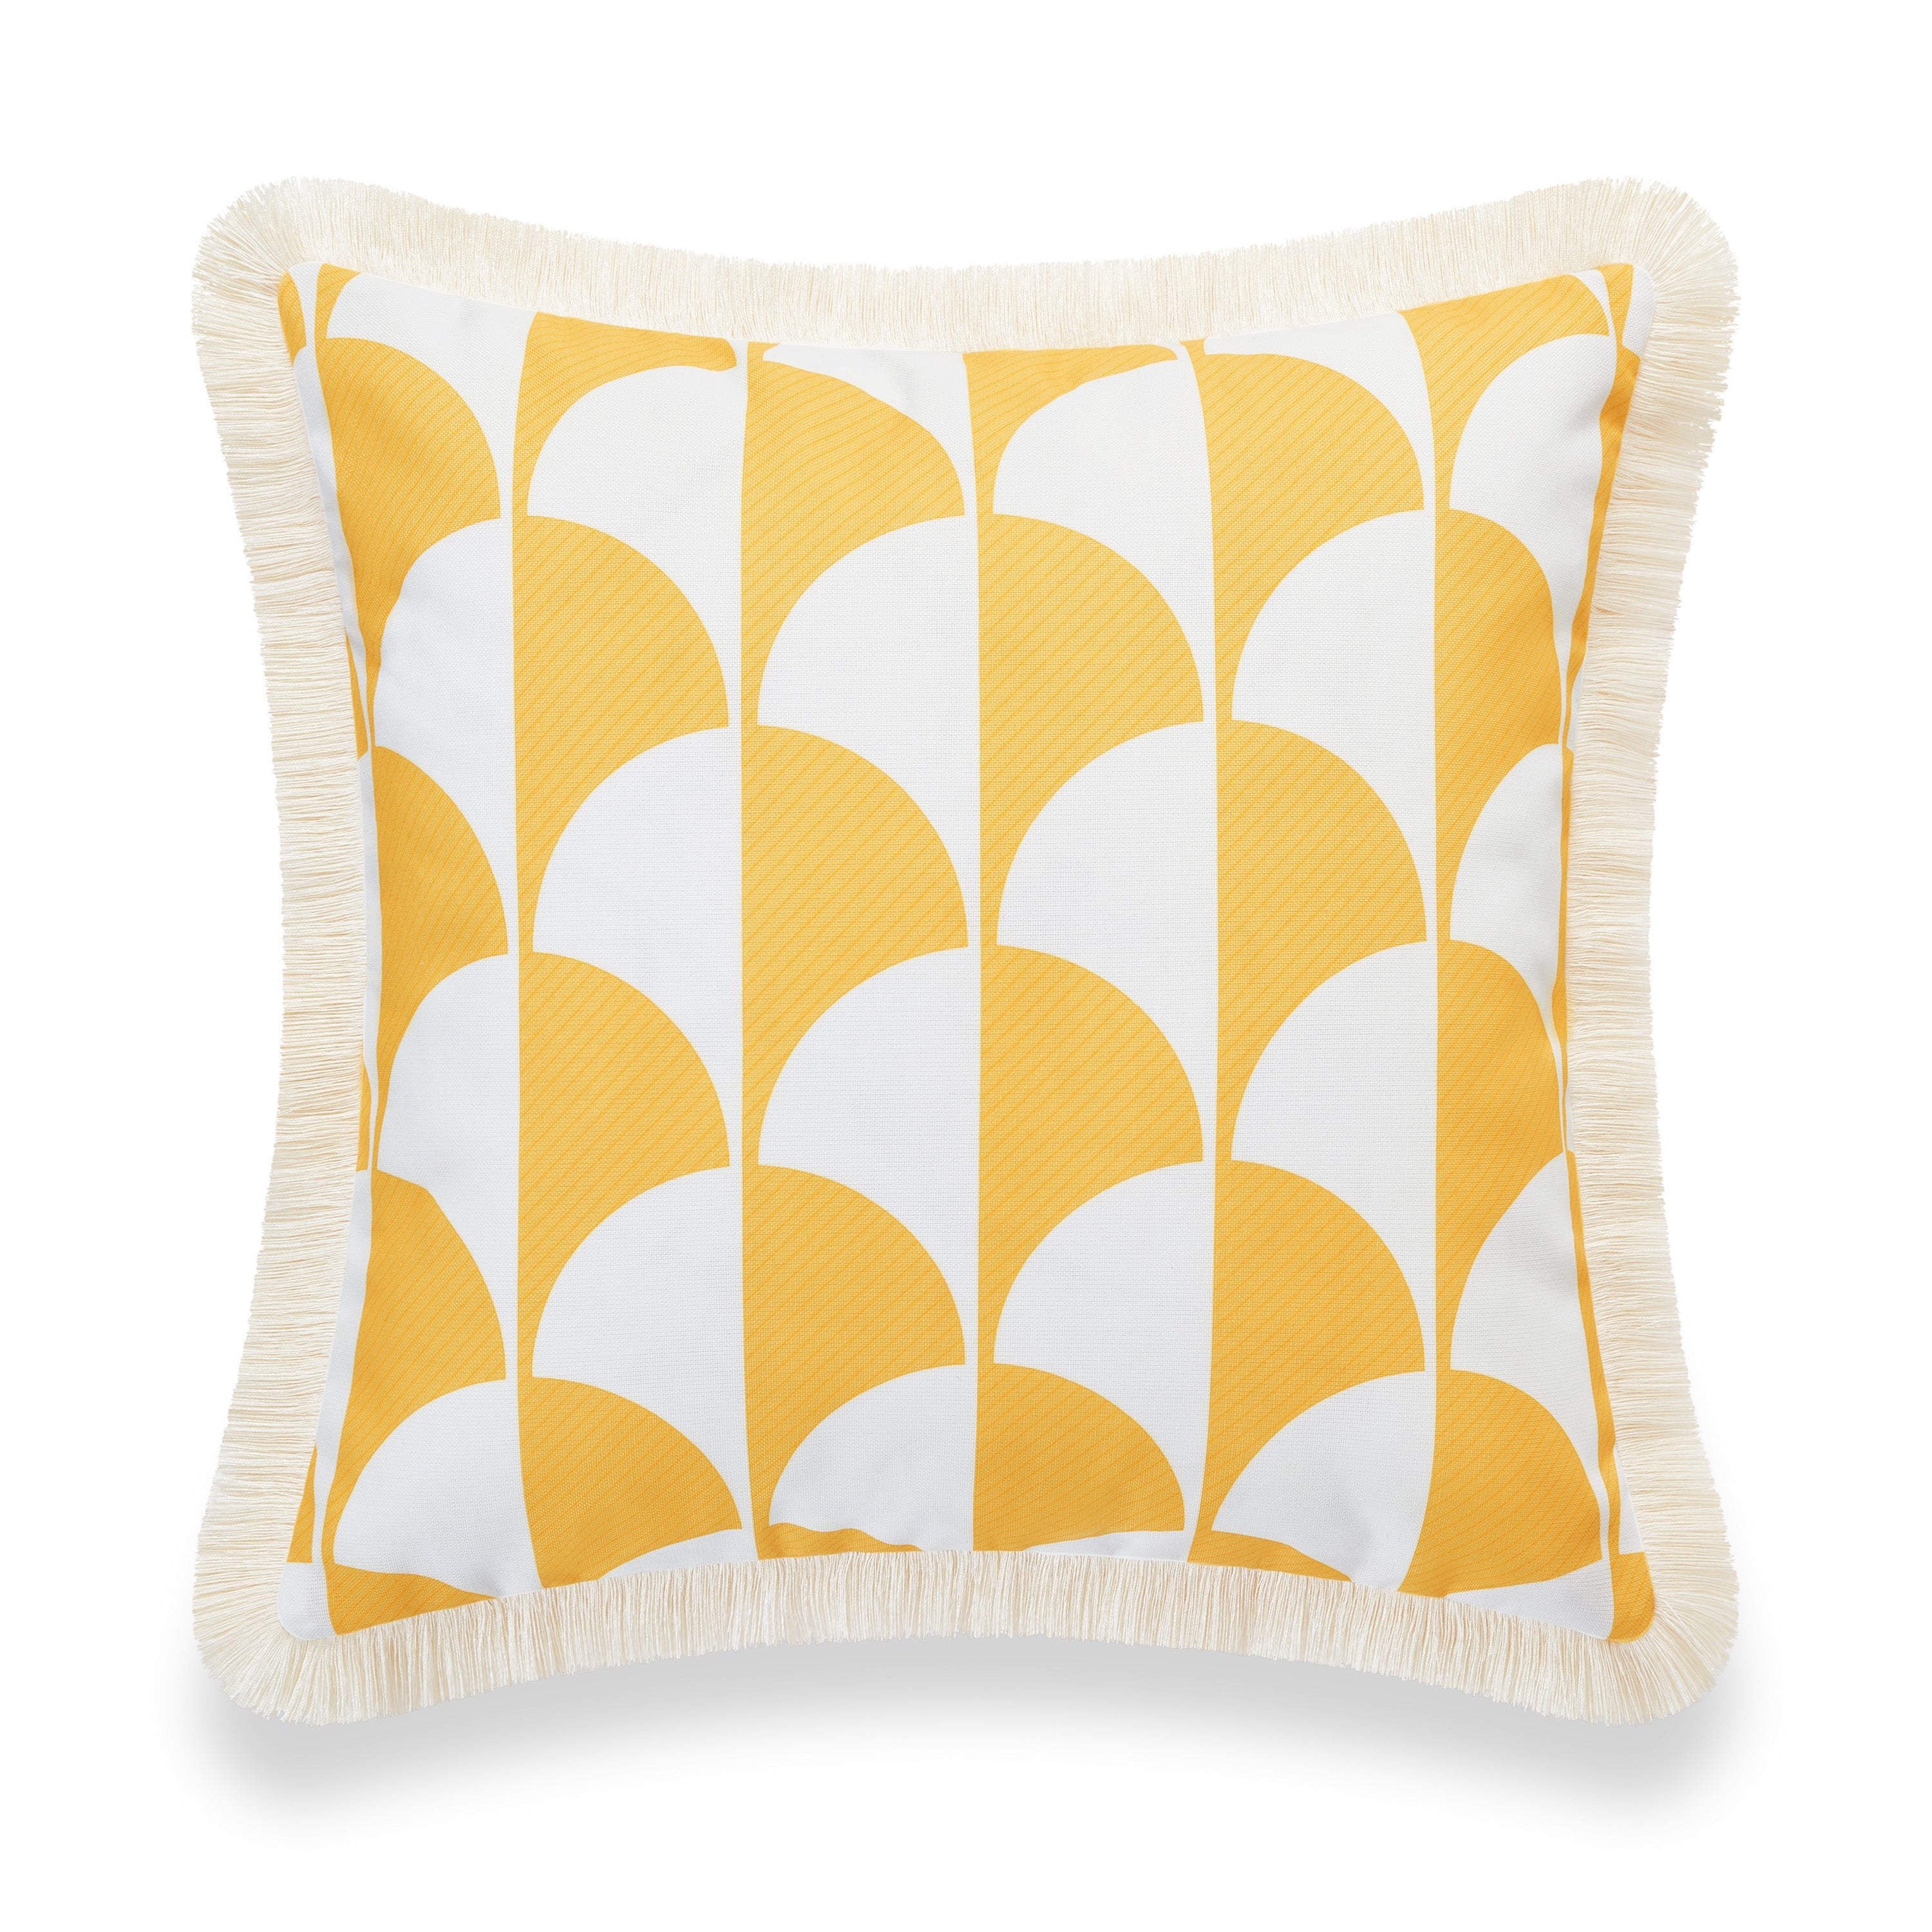 Coastal Indoor Outdoor Pillow Cover, Scale Motif Fringe, Yellow, 20"x20"